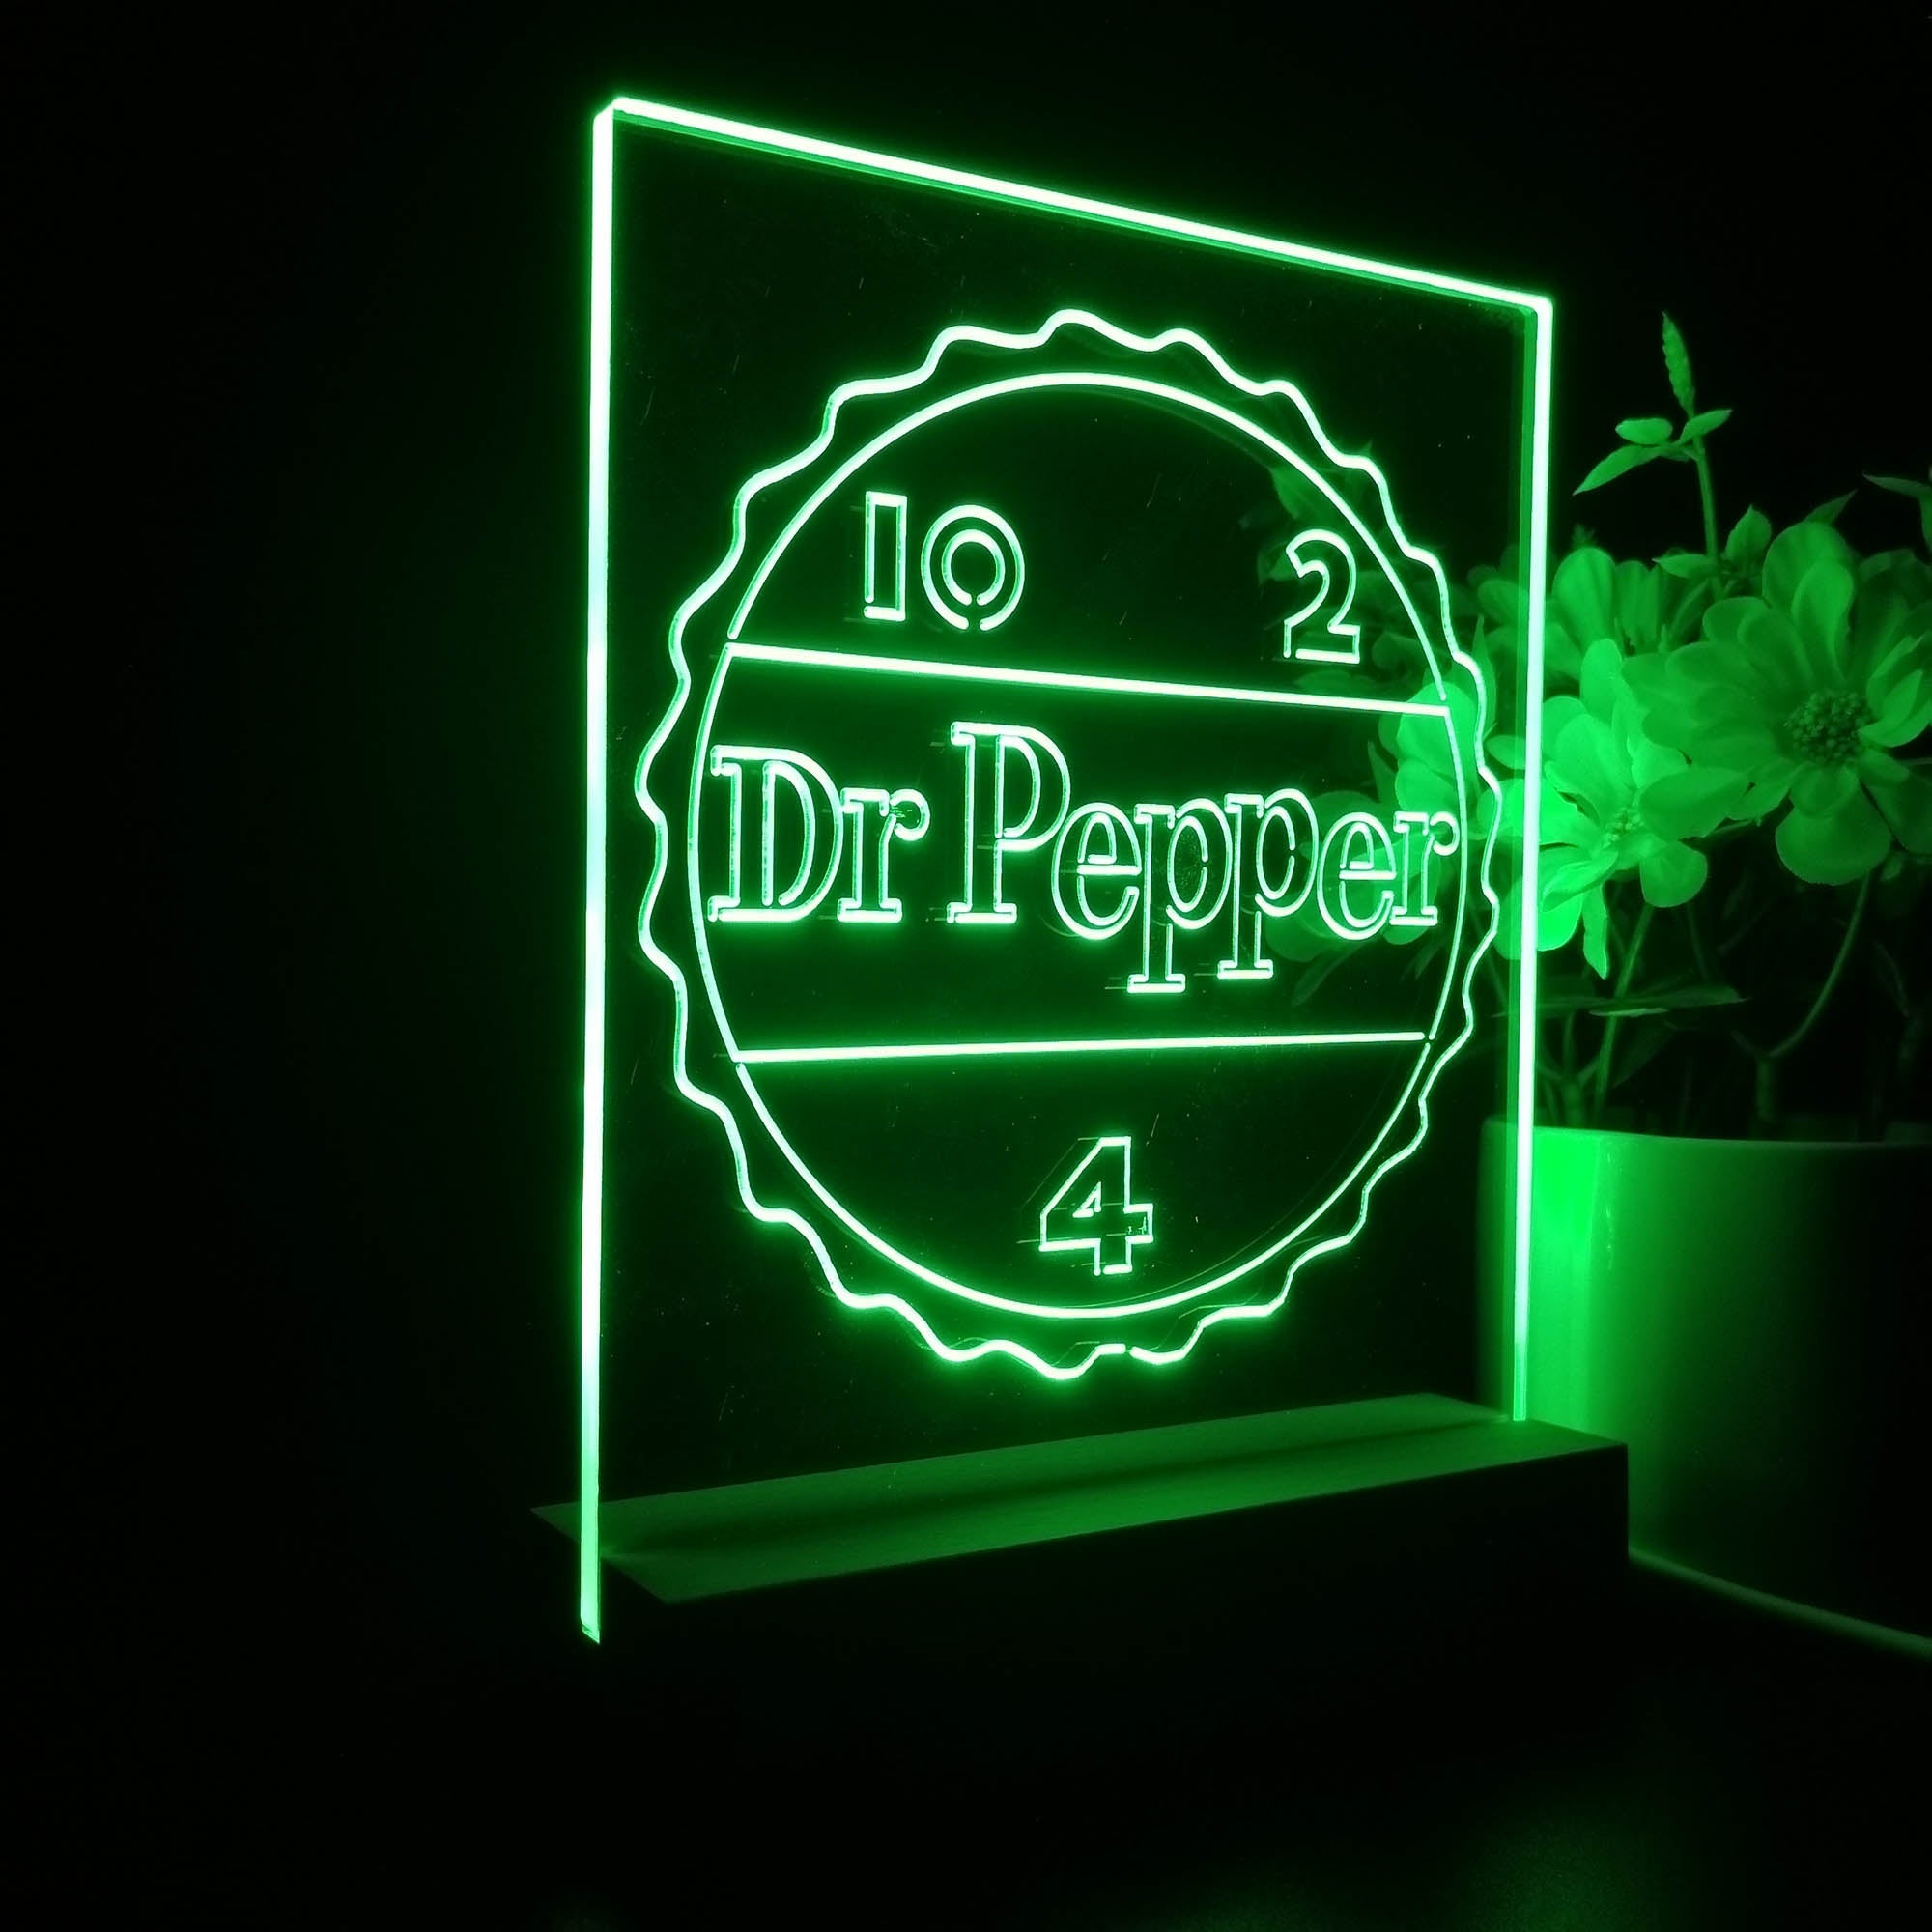 Dr Pepper 10 2 4 Drink 3D Illusion Night Light Desk Lamp